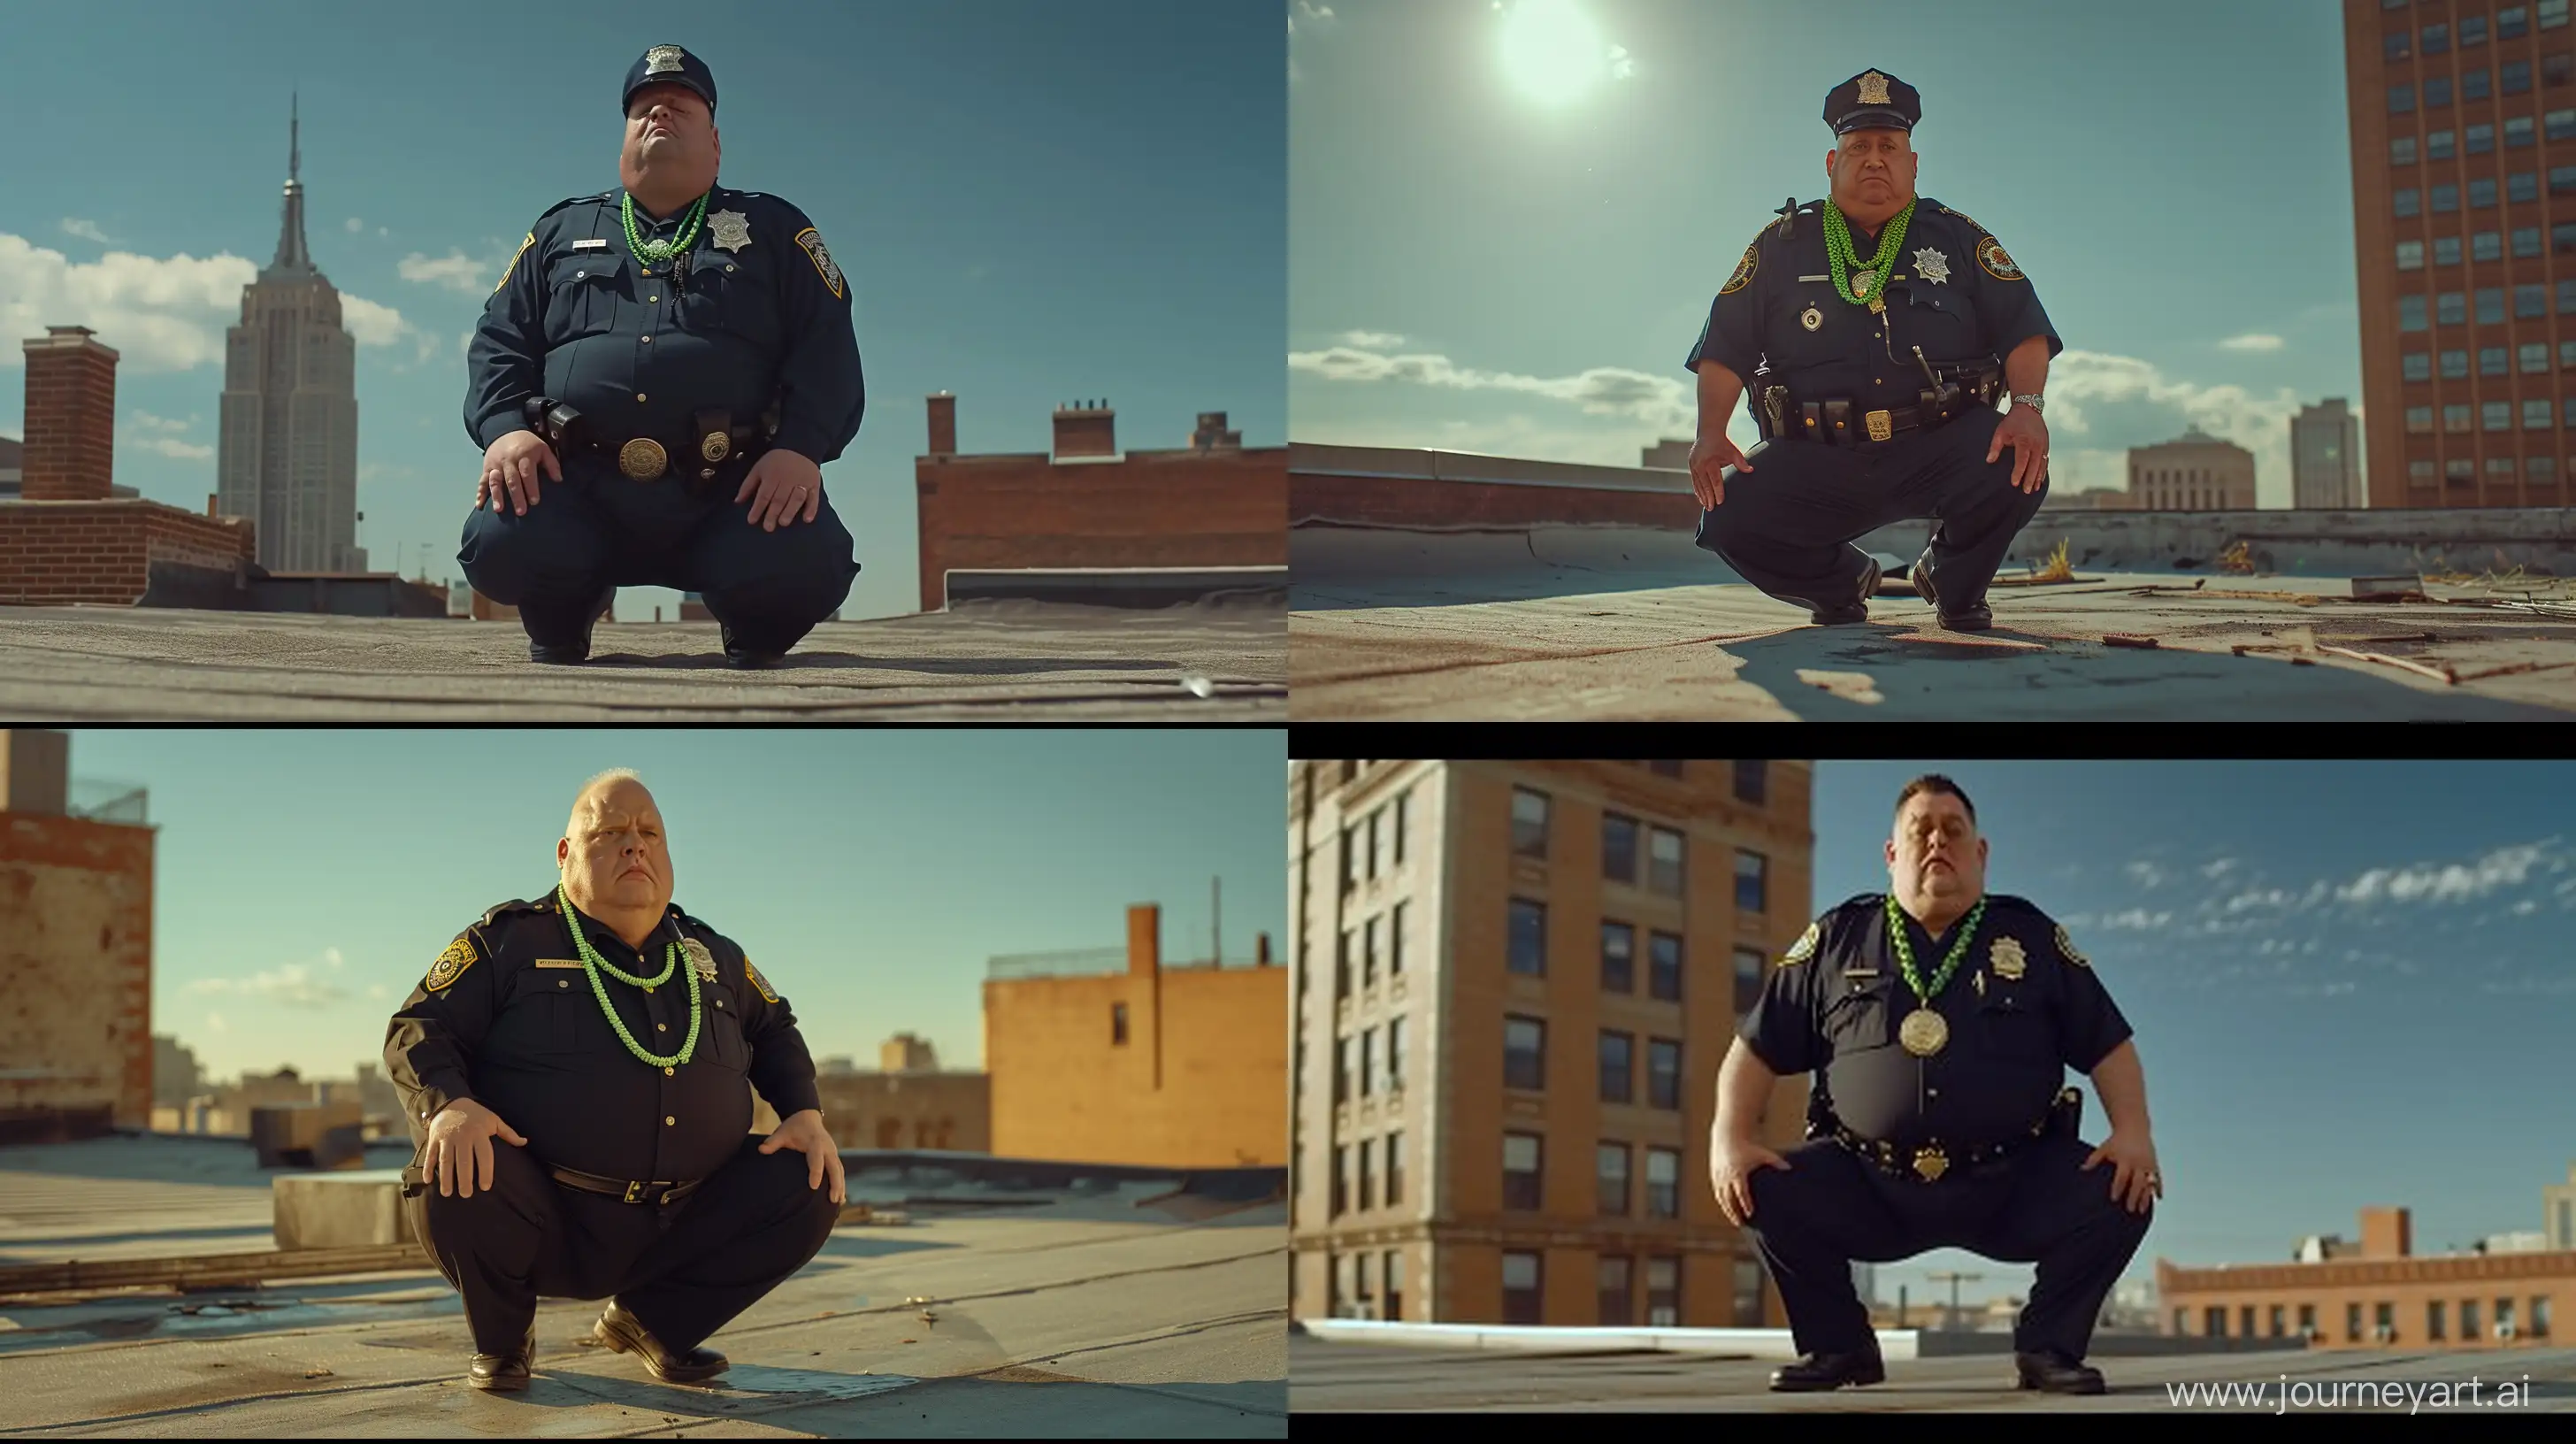 Senior-Police-Officer-Kneeling-on-Rooftop-in-Daylight